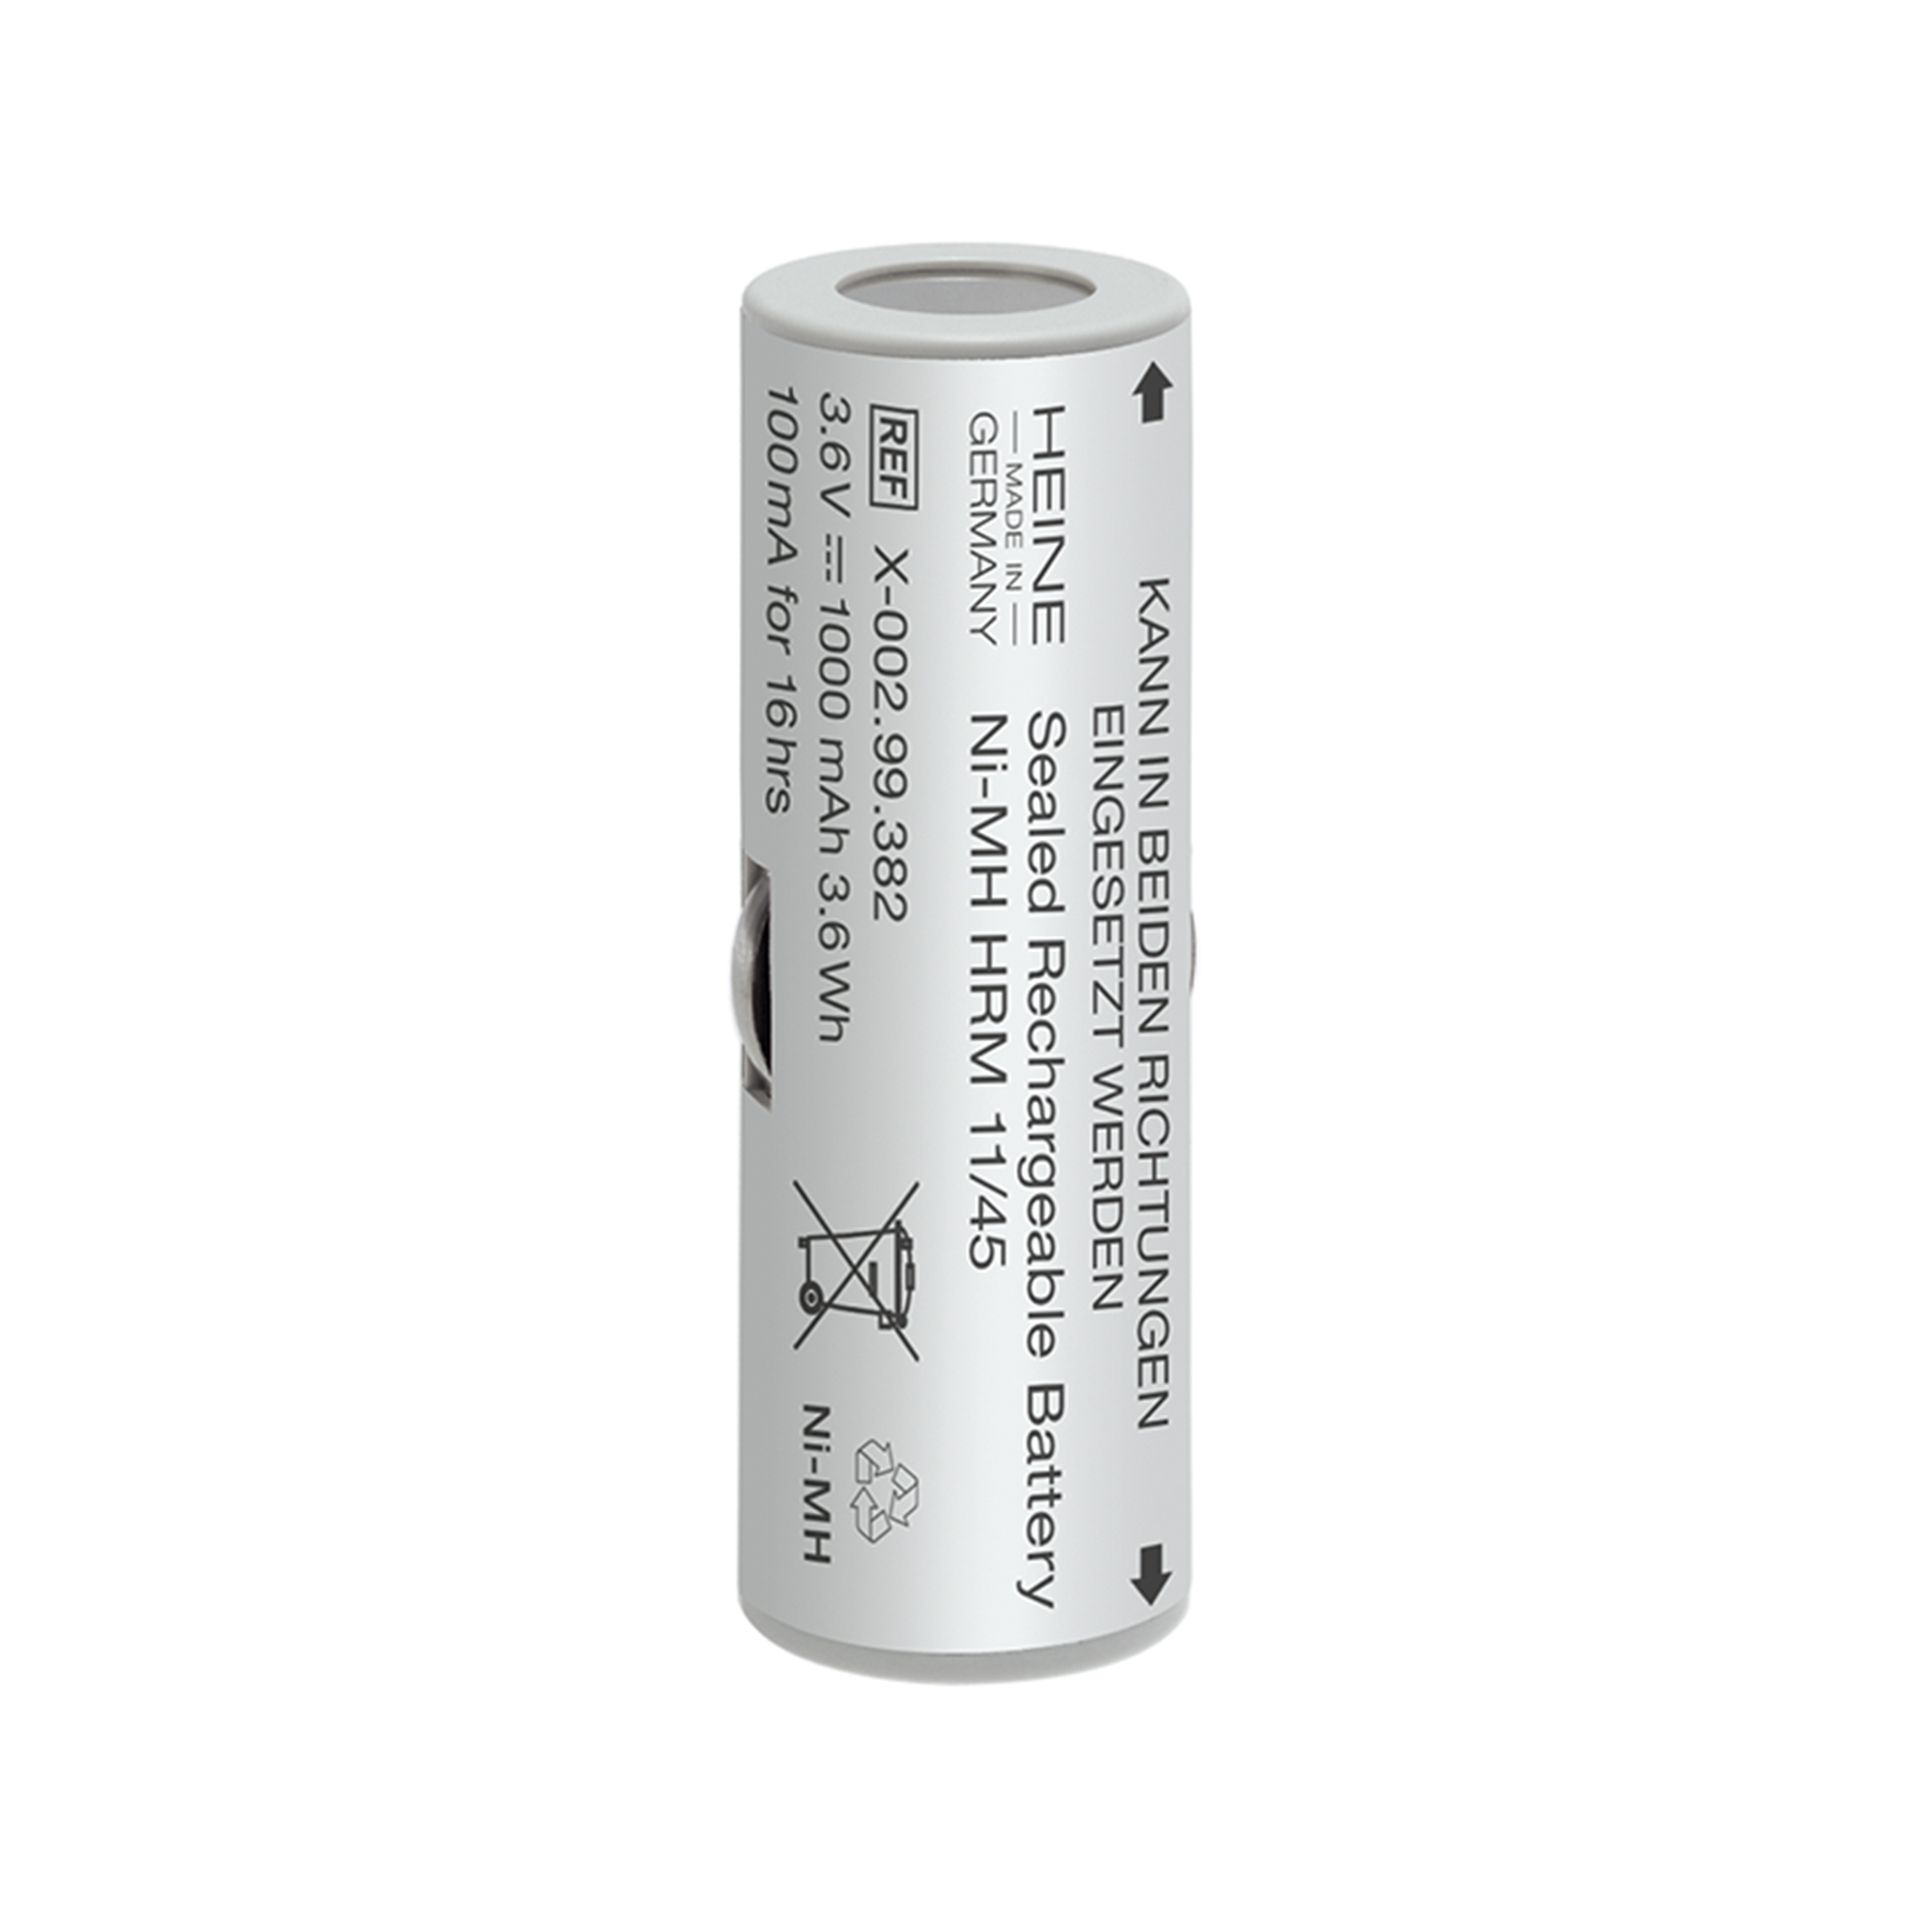 HEINE batería recargable 3.5 V NiMH